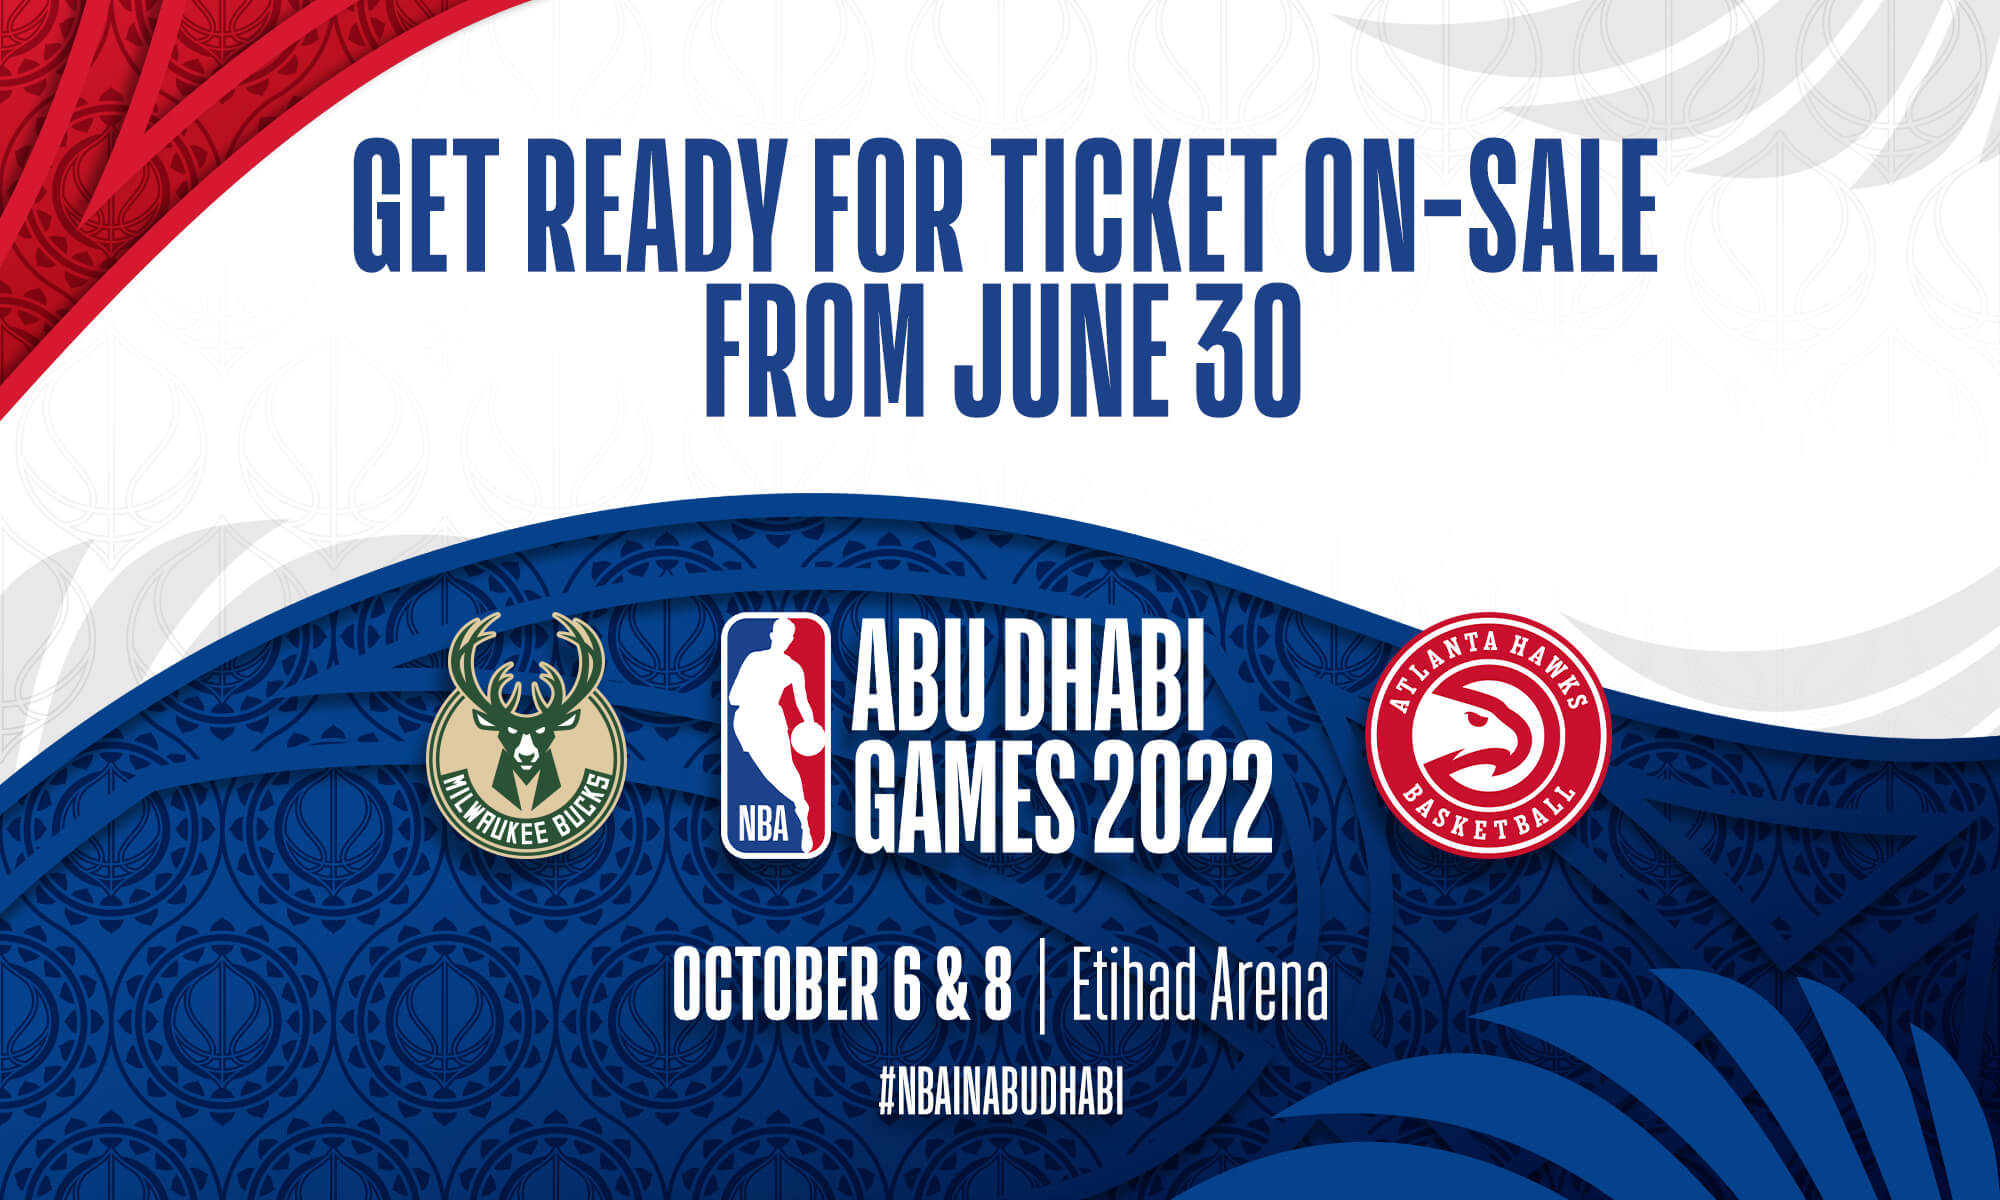 NBA in Abu Dhabi 2022: How to meet hero Shaquille O'Neal